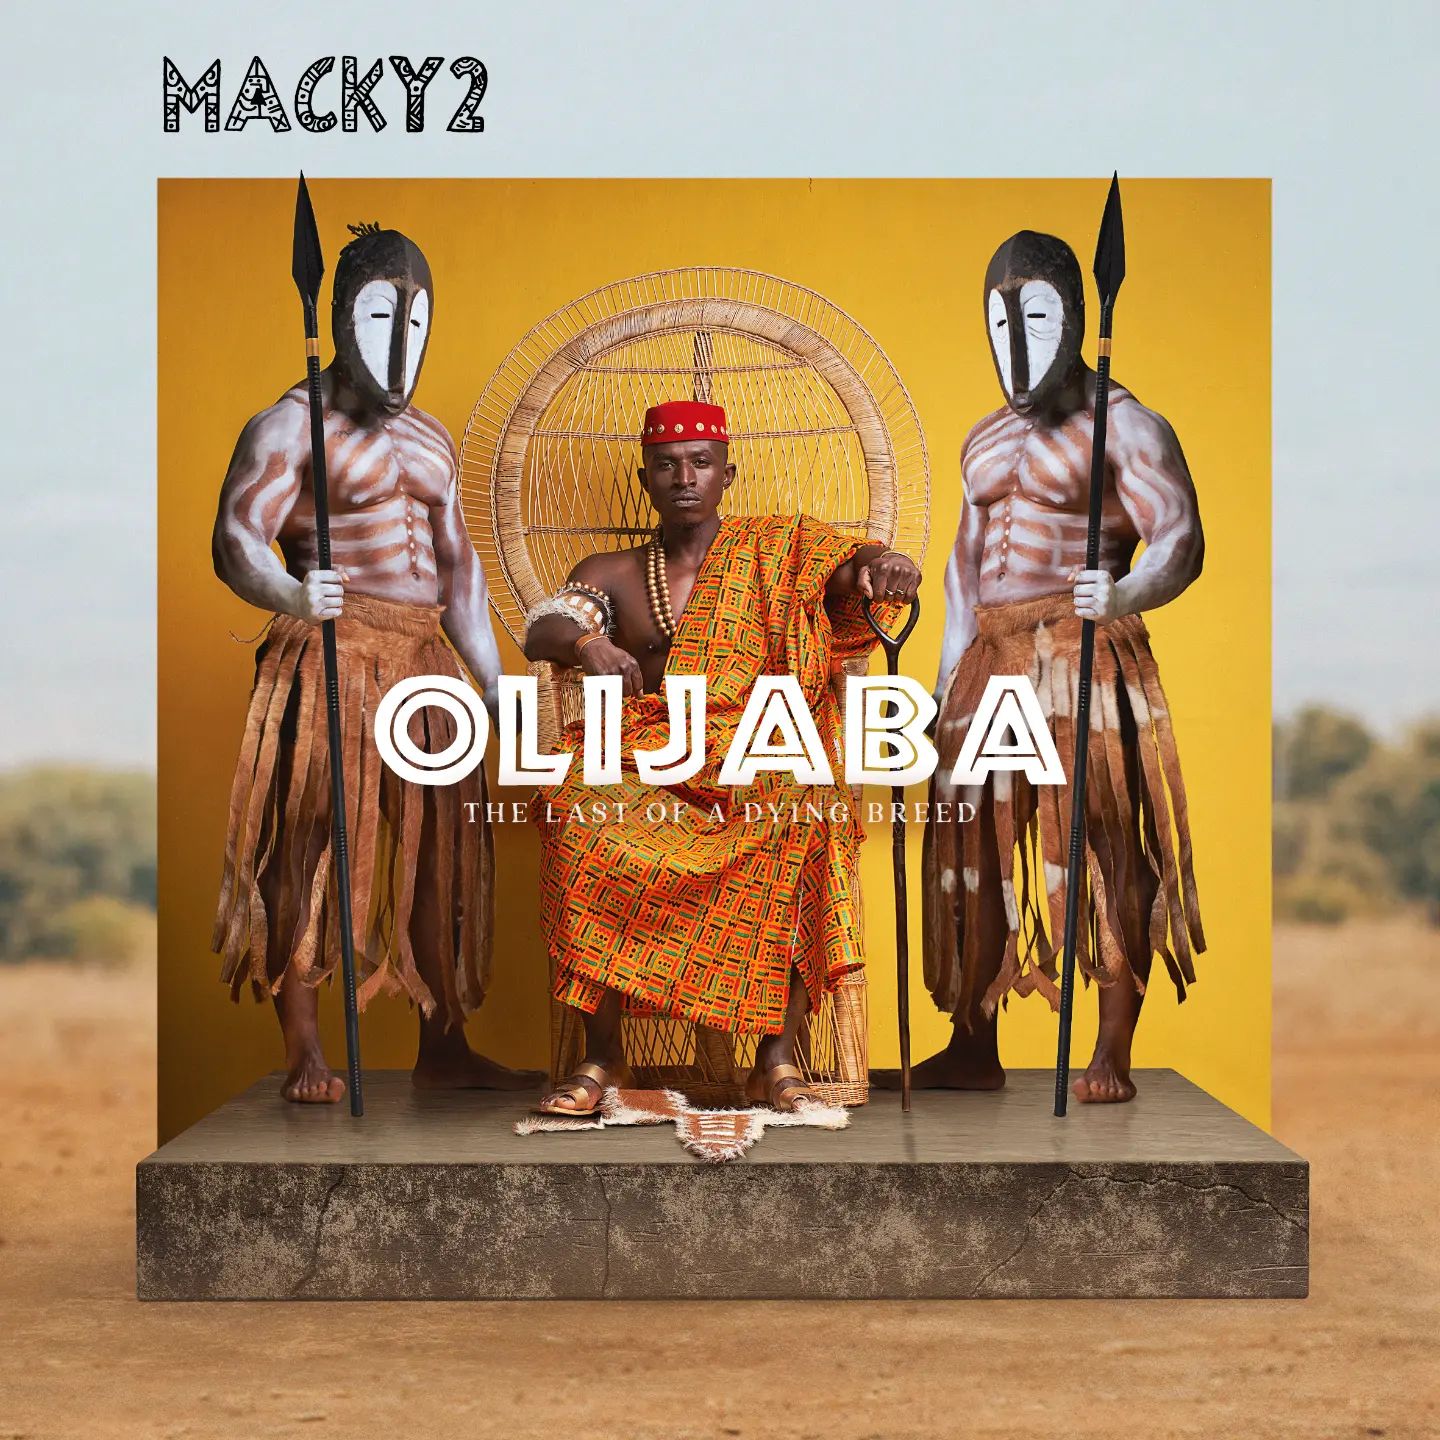 Olijaba Album By Macky 2 Has Hit 1 Million Streams On Boomplay In 24 hours